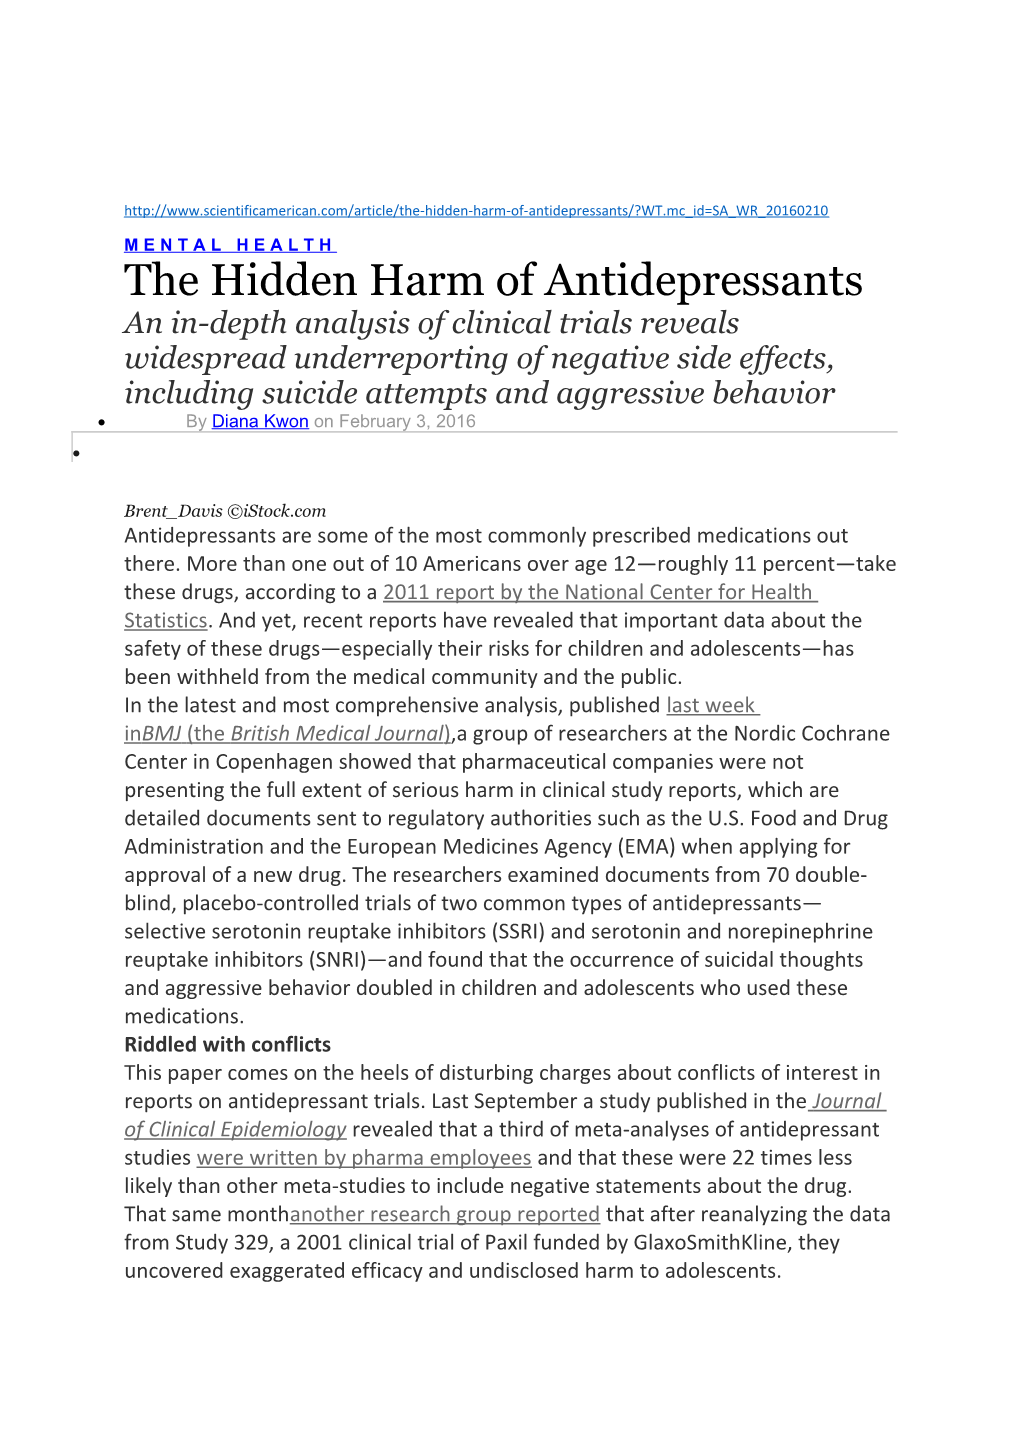 The Hidden Harm of Antidepressants